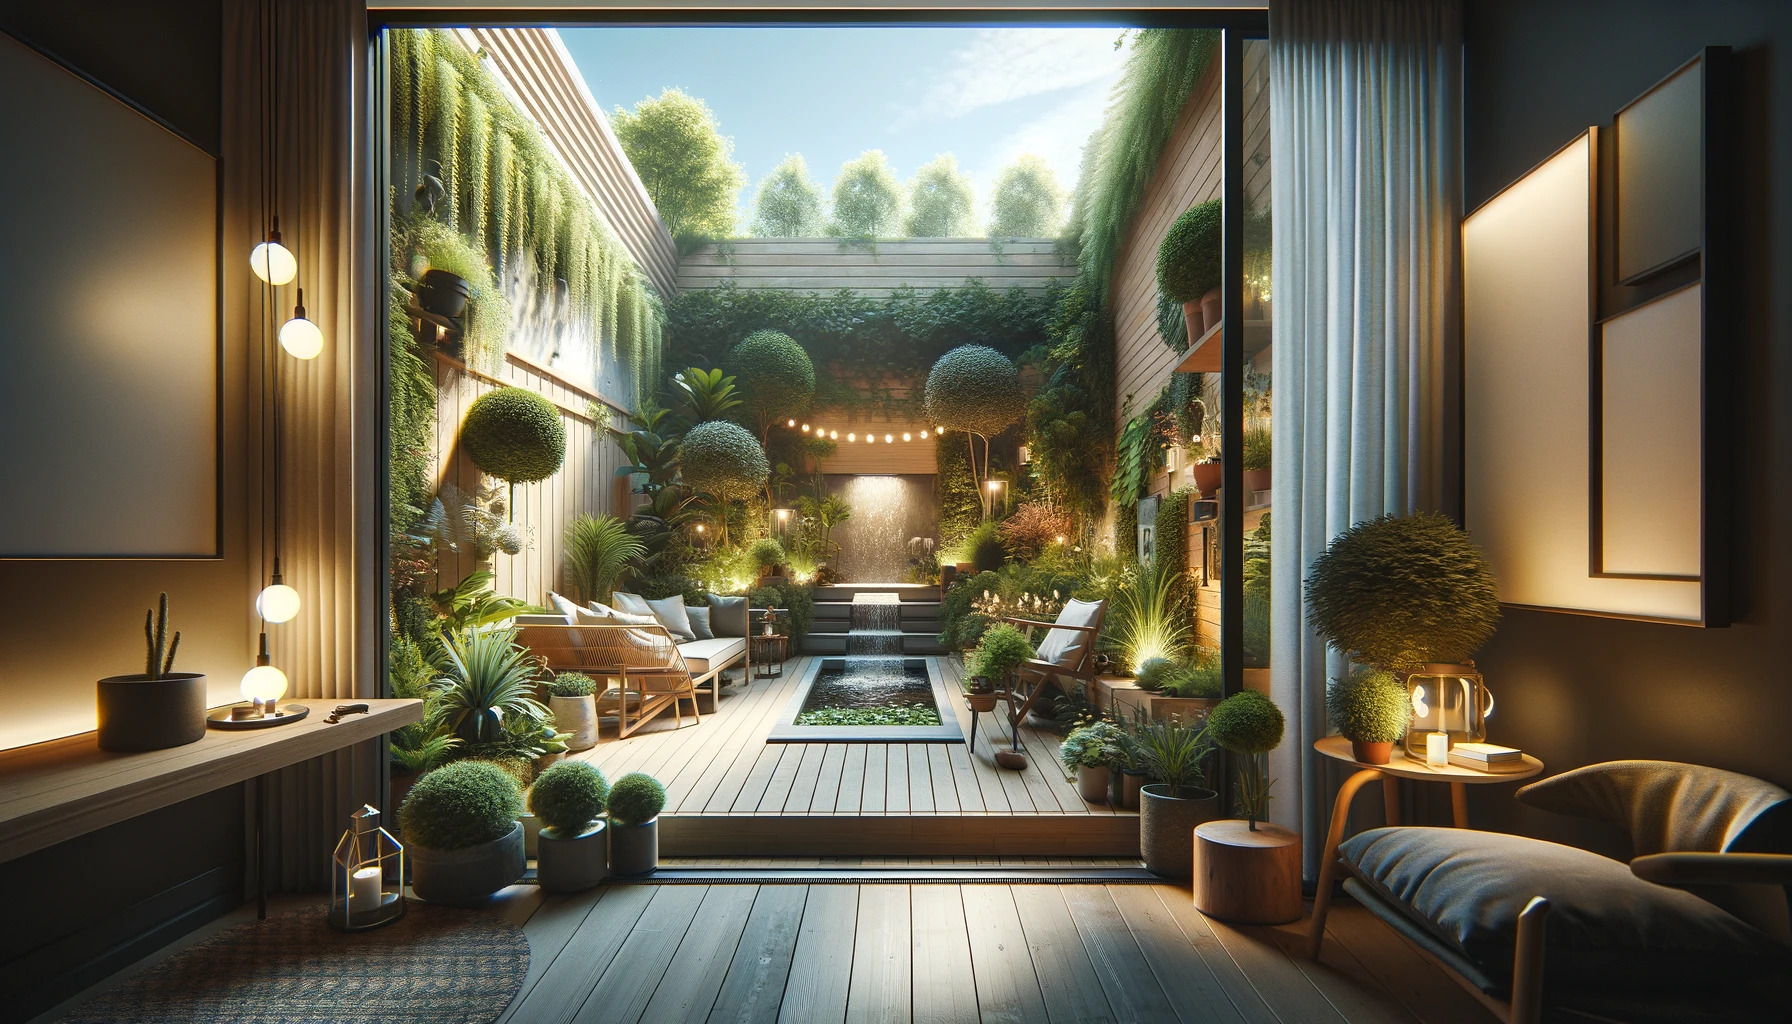 Small Backyard Ideas: 15 Beautiful Designs For Tiny Gardens